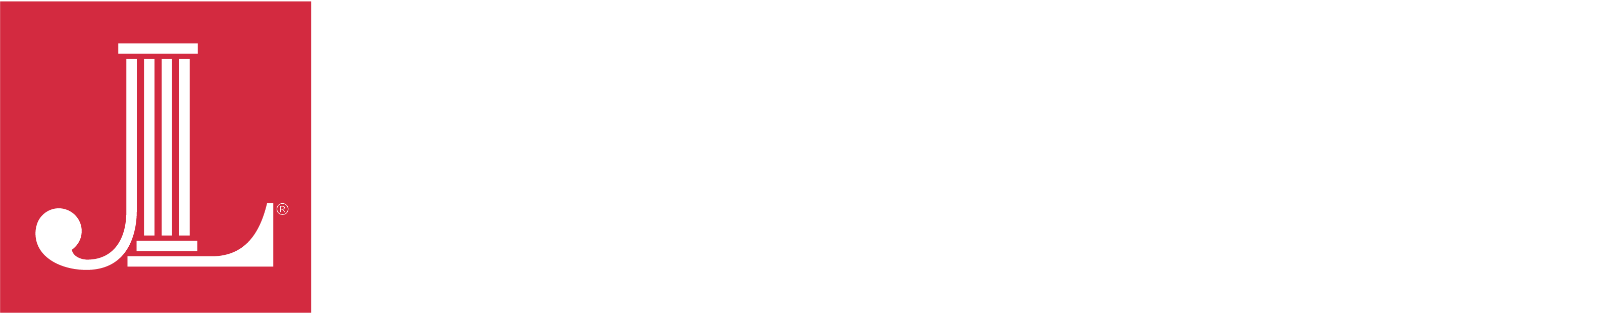 The Association of Junior Leagues International logo